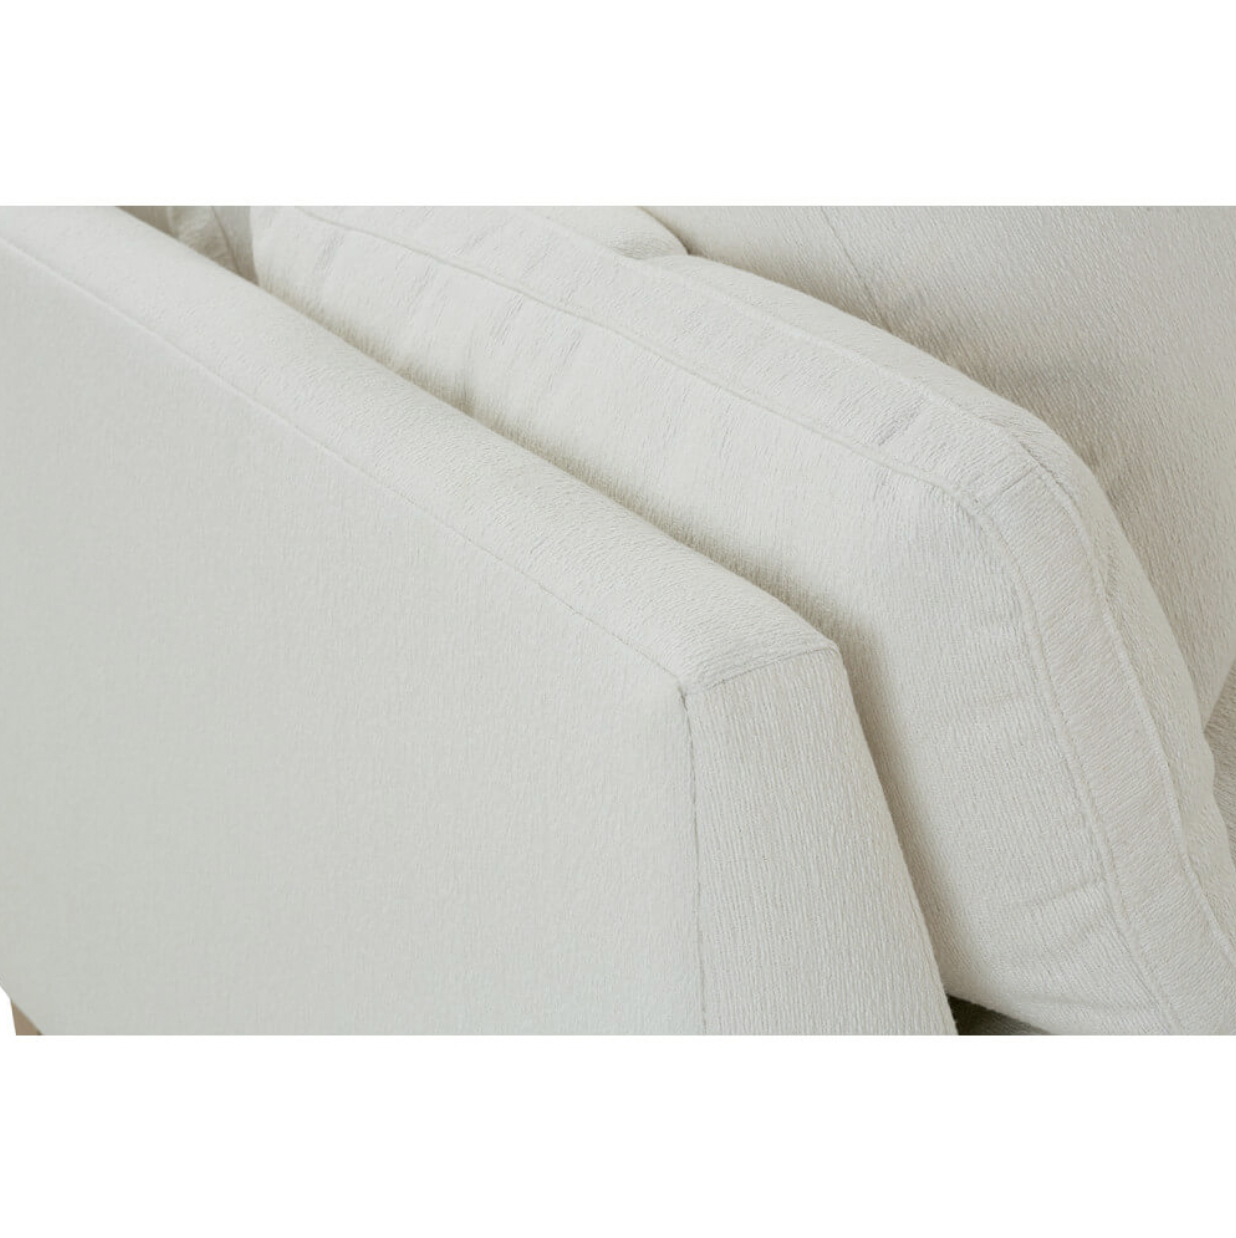 Sabine Upholstered Sofa 99"